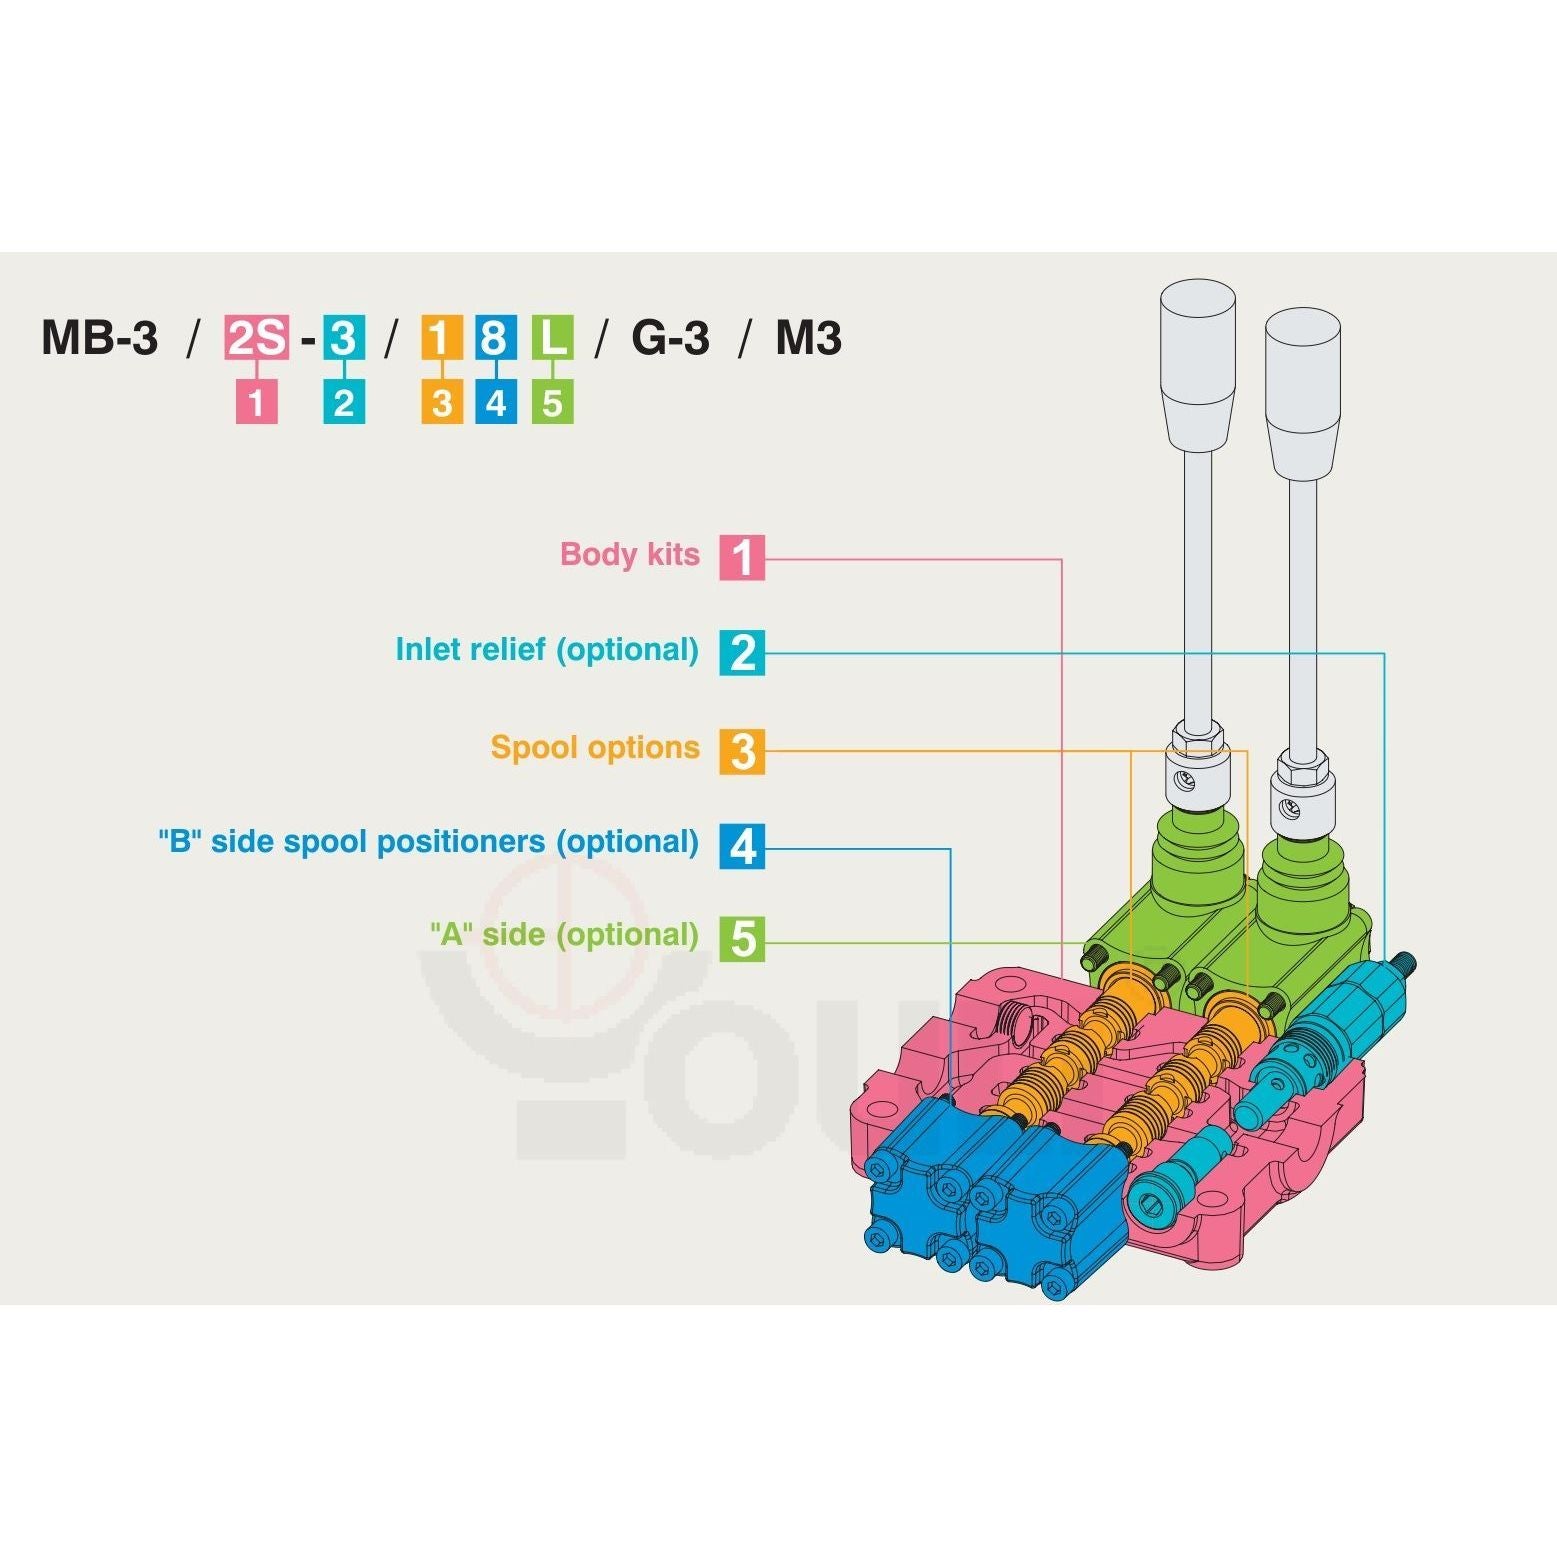 MB-3 Monoblock Valve, 7 Section : Youli MB-3 Series Monoblock Directional Control Valve, 7 Sections, 12 gpm, 900-2900 psi